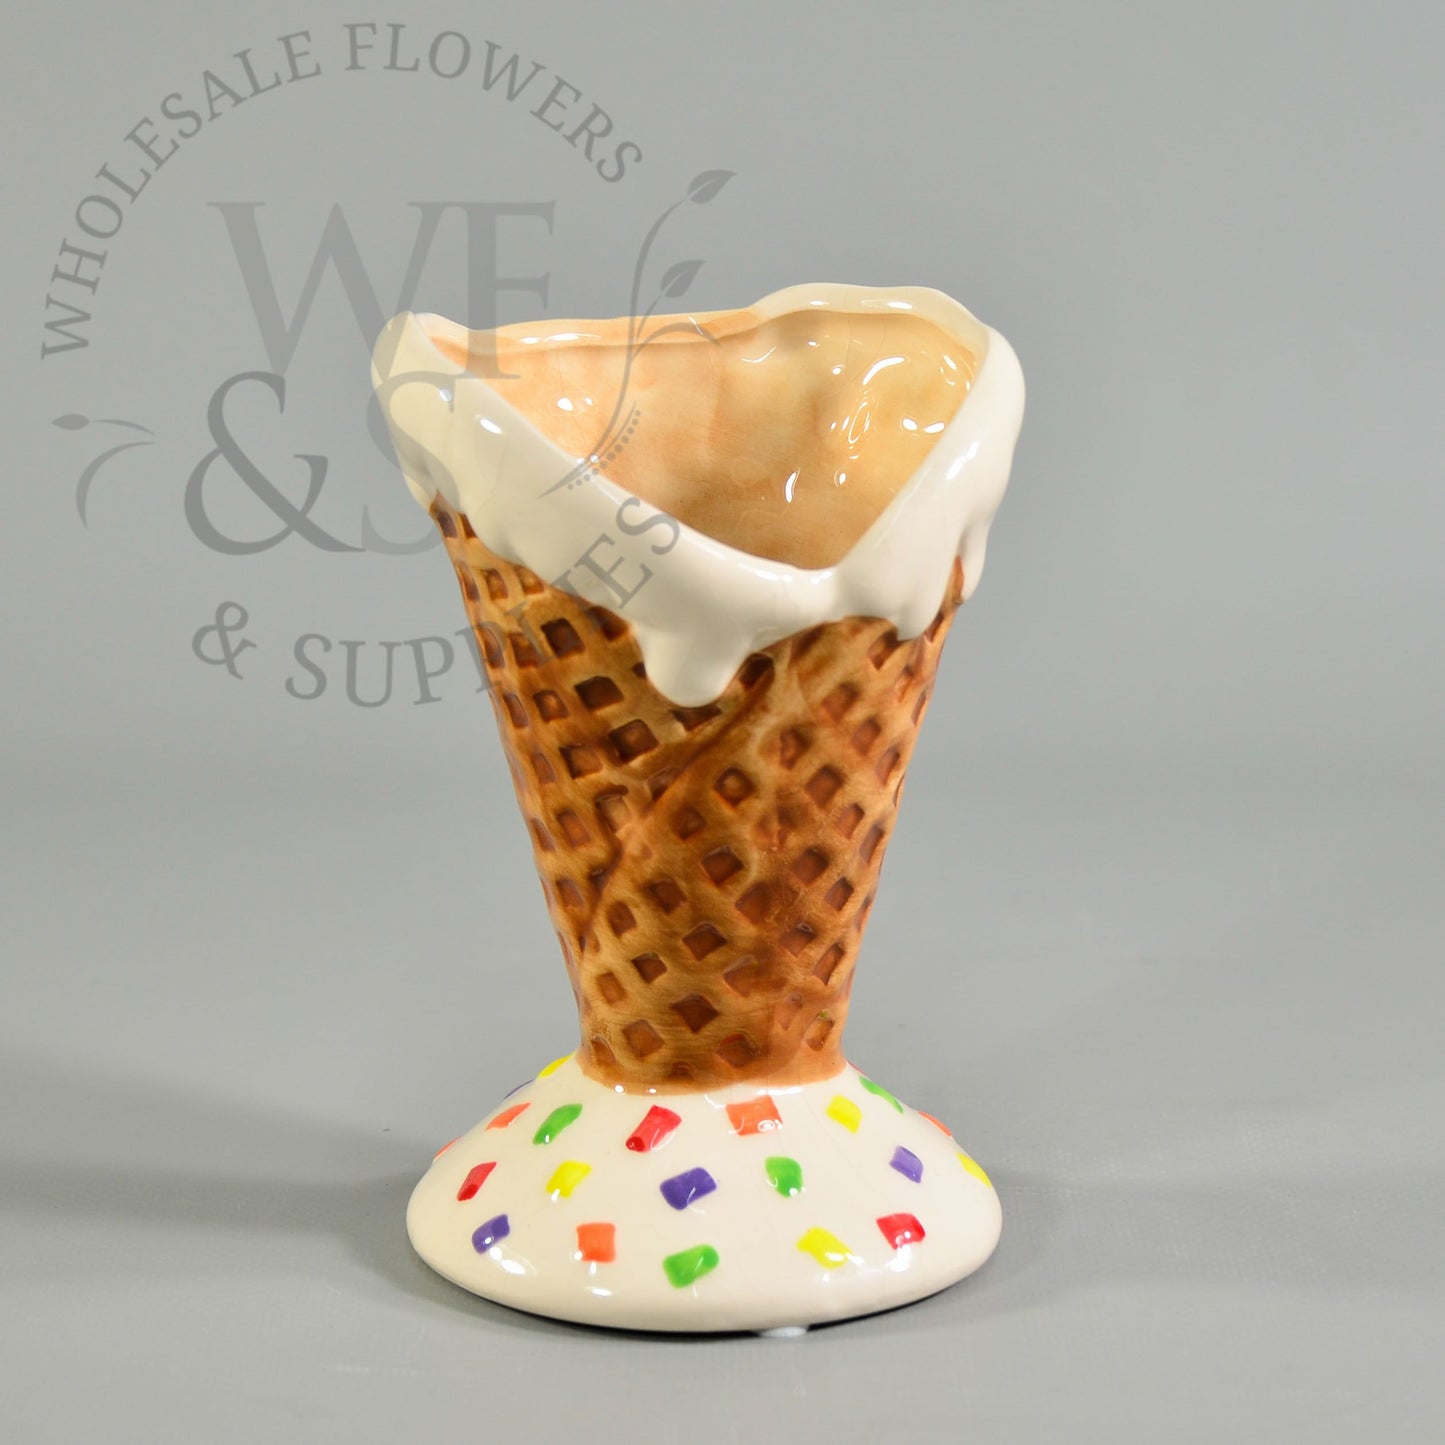 Ice Cream Cone Ceramic Vases Pink, White and Yellow